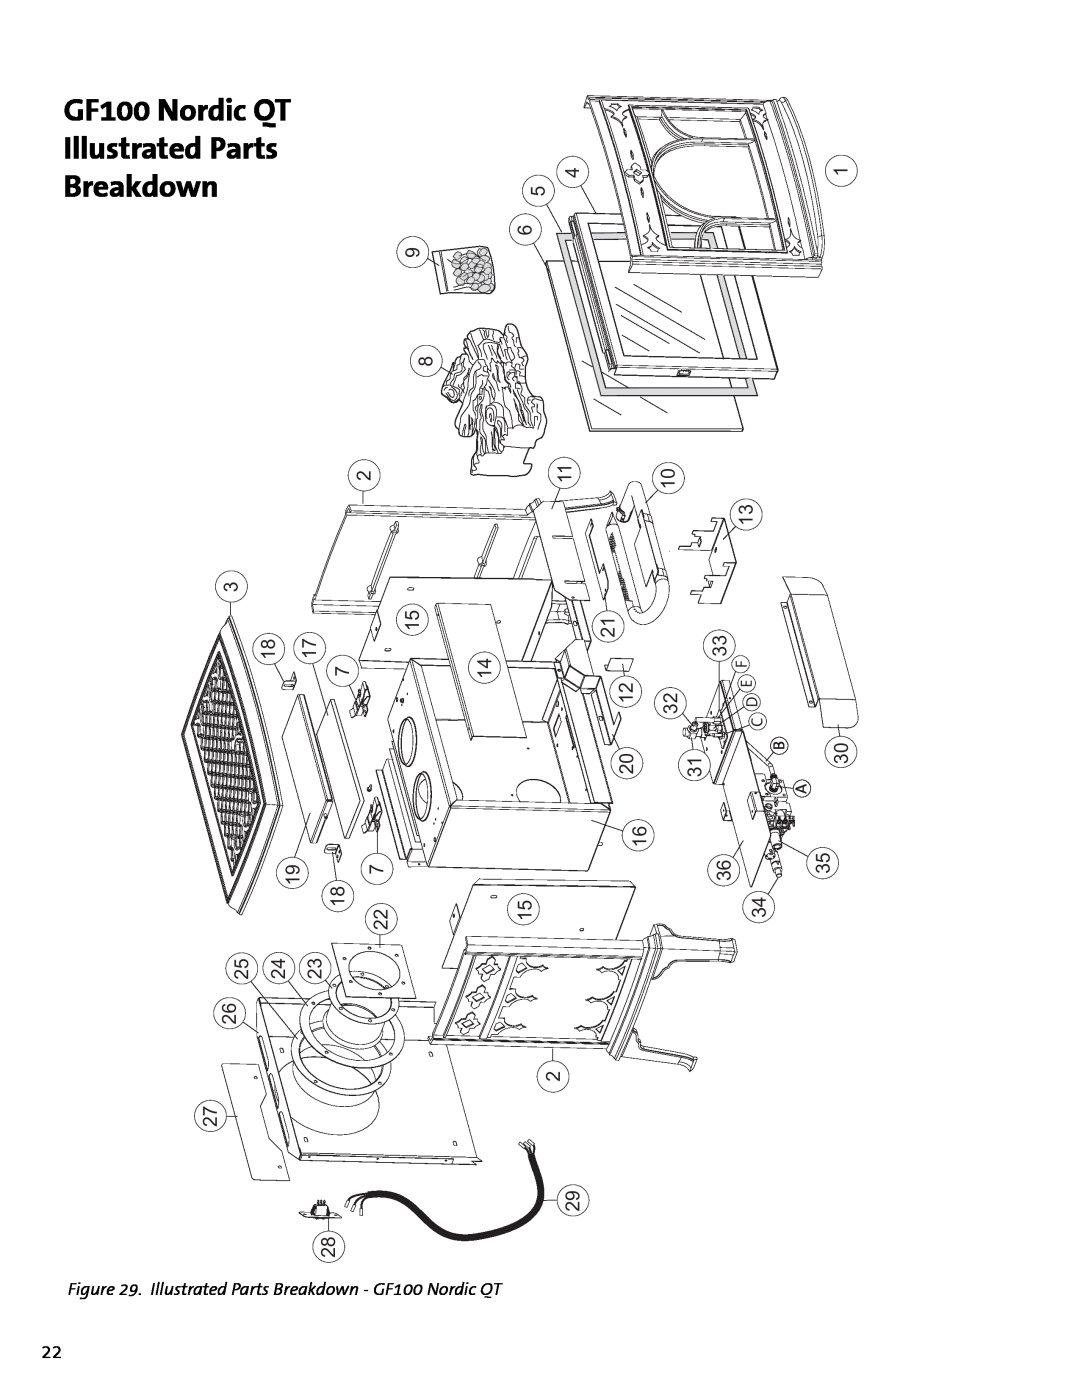 Jotul GF100 DV manual GF100 Nordic QT Illustrated Parts Breakdown, Illustrated Parts Breakdown - GF100 Nordic QT 